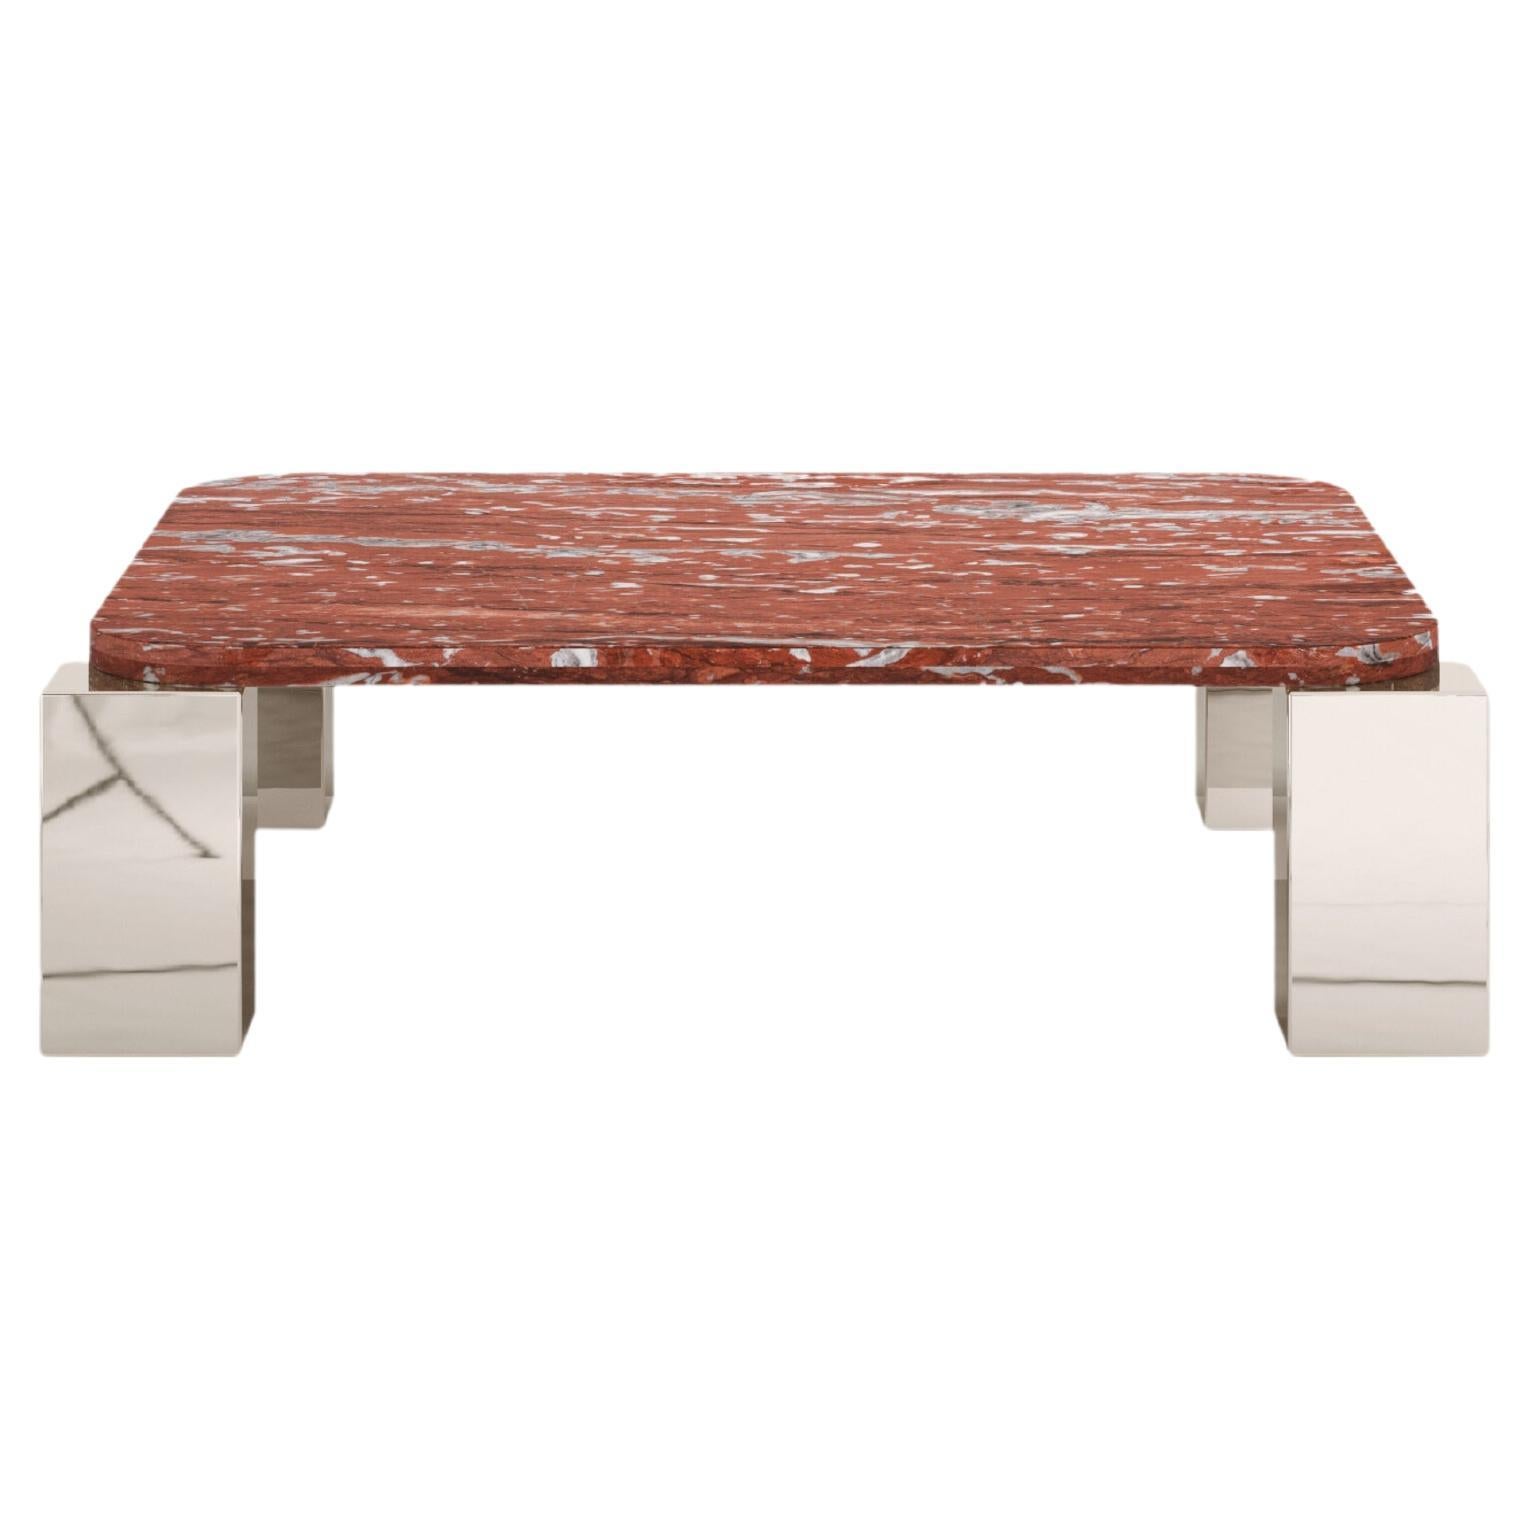 FORM(LA) Cubo Square Coffee Table 62”L x 62"W x 14”H Francia Marble & Chrome